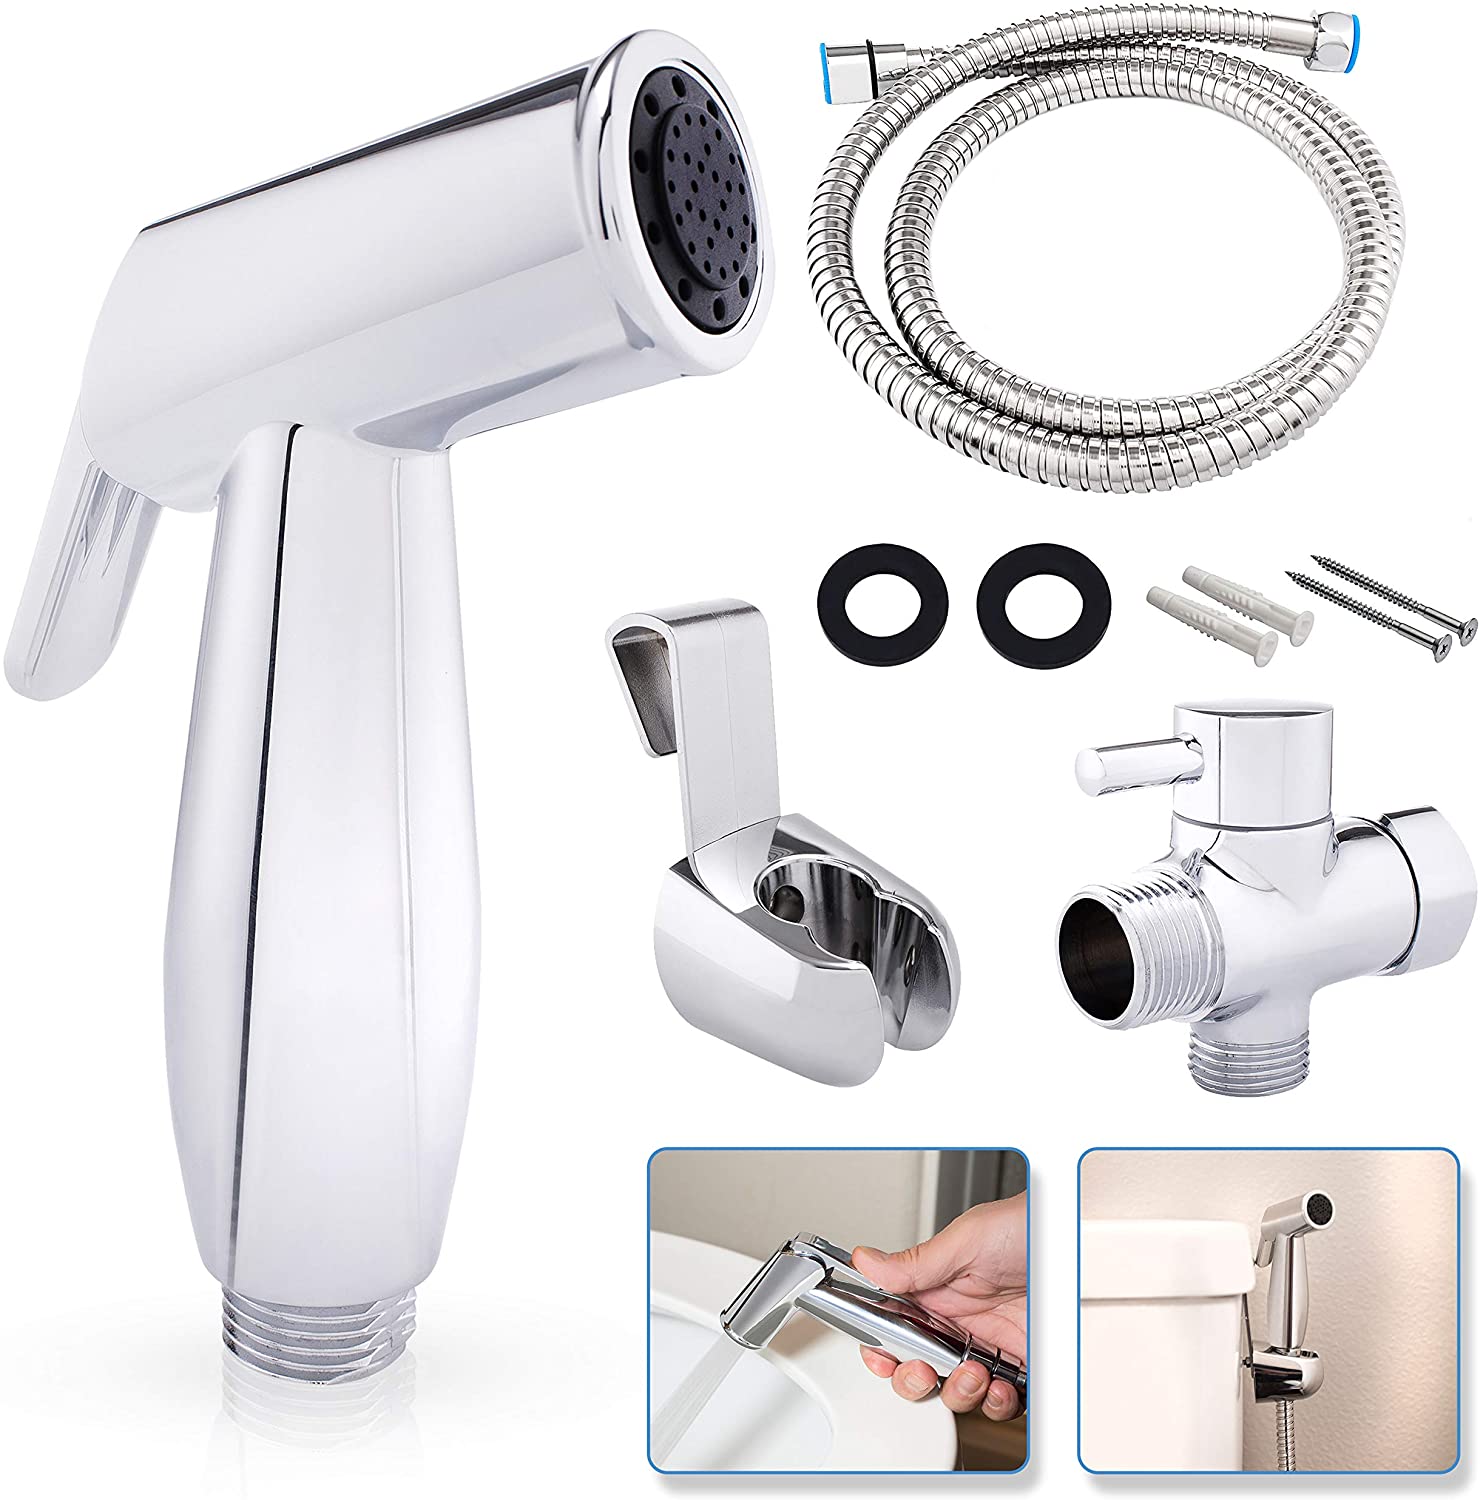 Review of JP Bathroom Master's Full Pressure & Leakproof Handheld Bidet Toilet Sprayer Kit